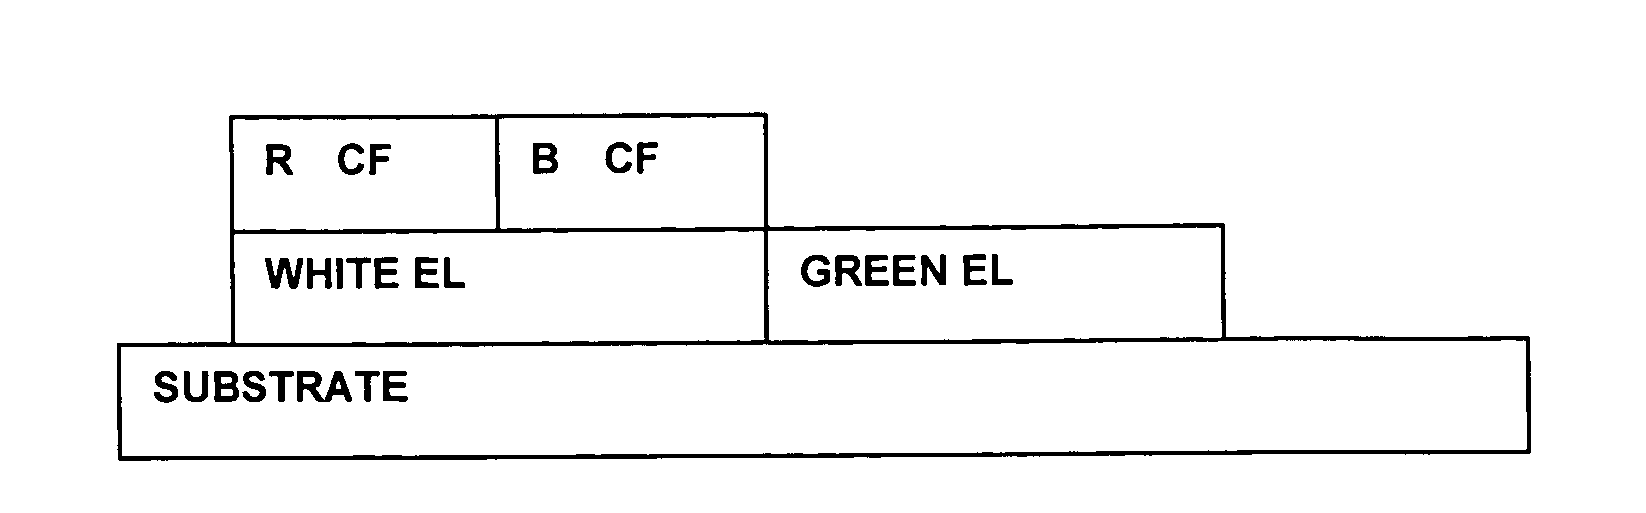 Organic EL panel